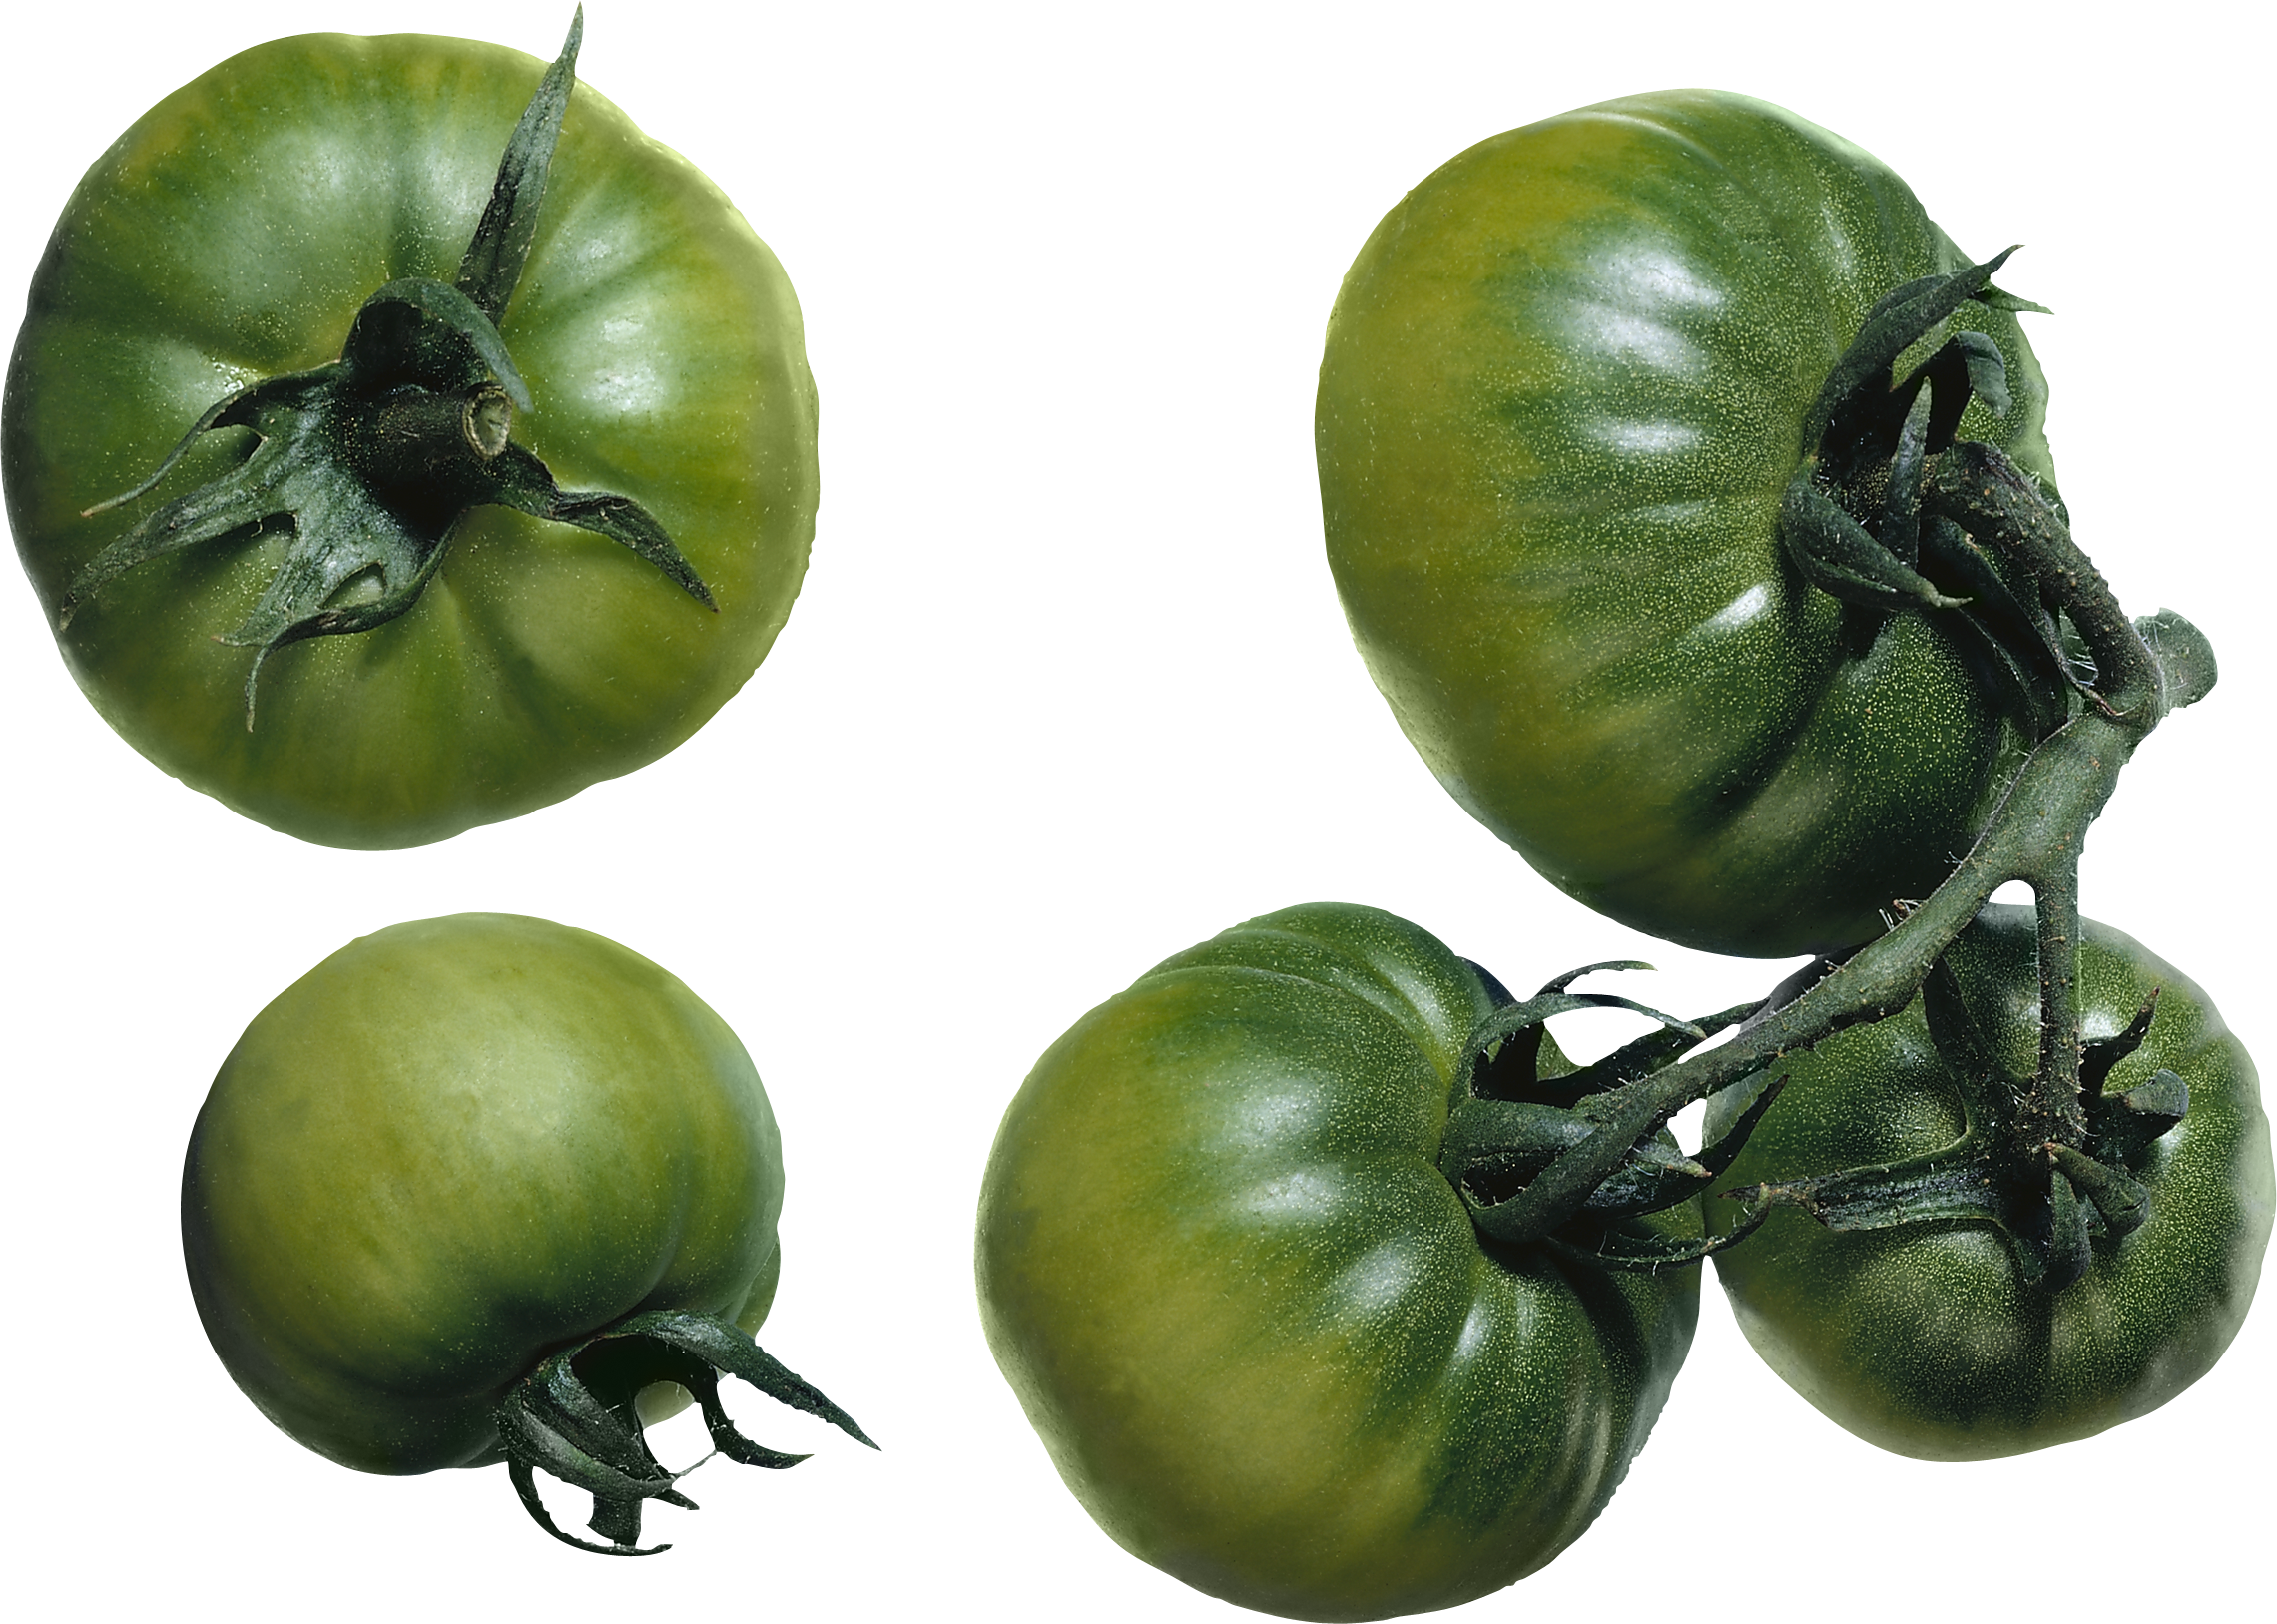 Yeşil domates